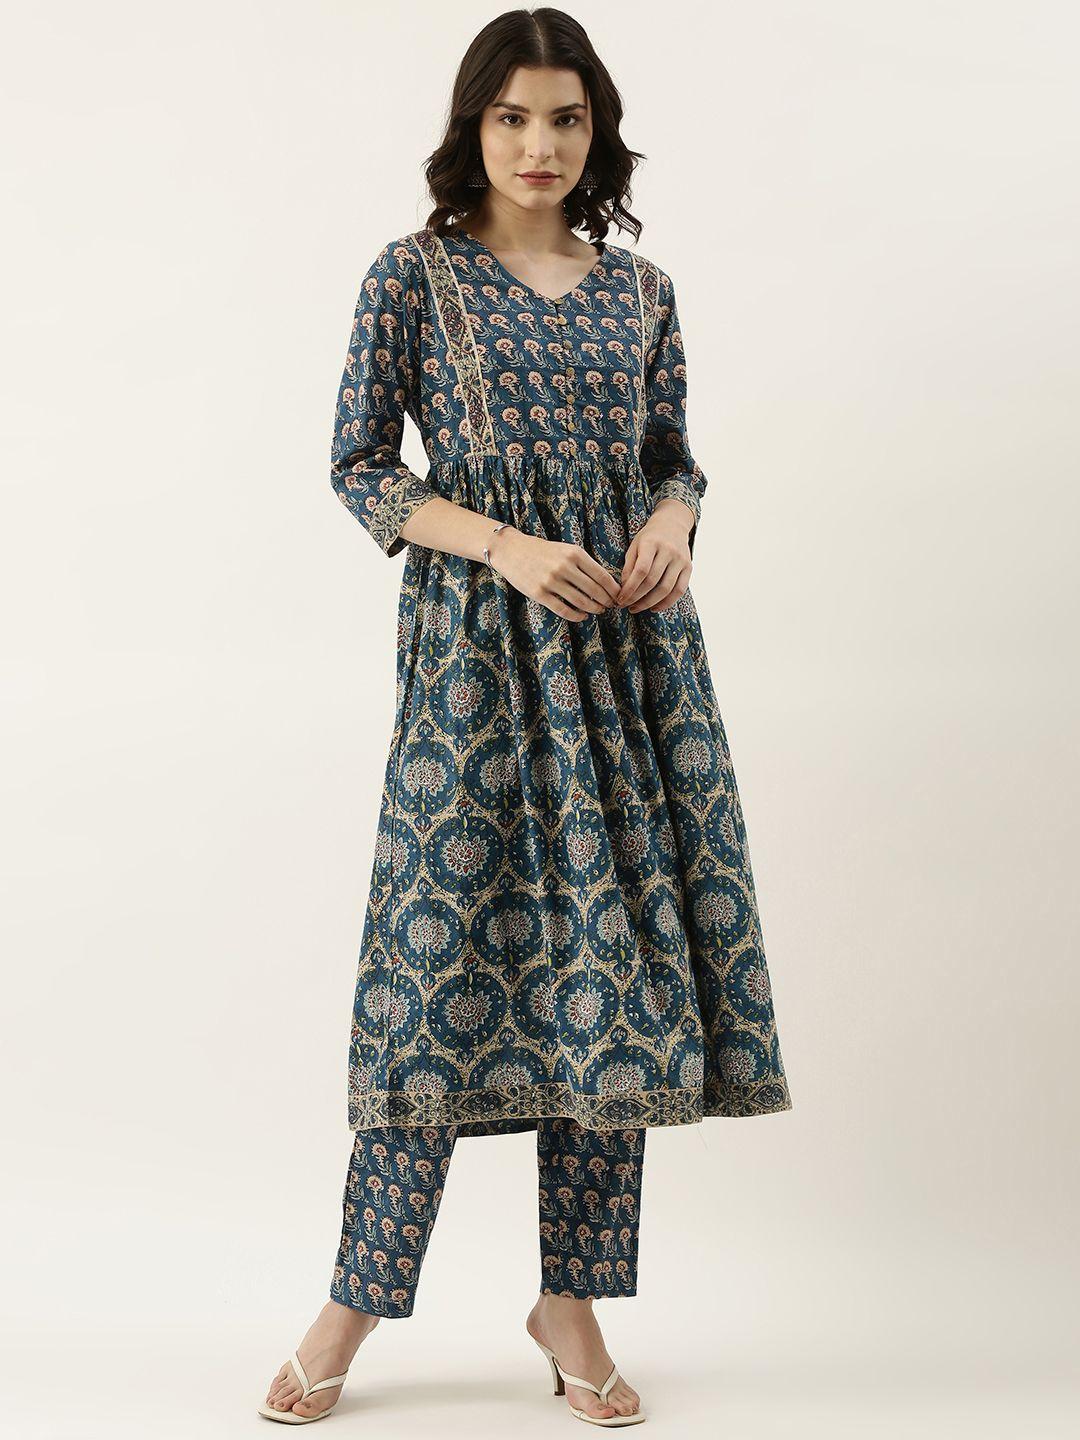 rangdeep women blue & beige ethnic motif printed pure cotton kurta with trousers